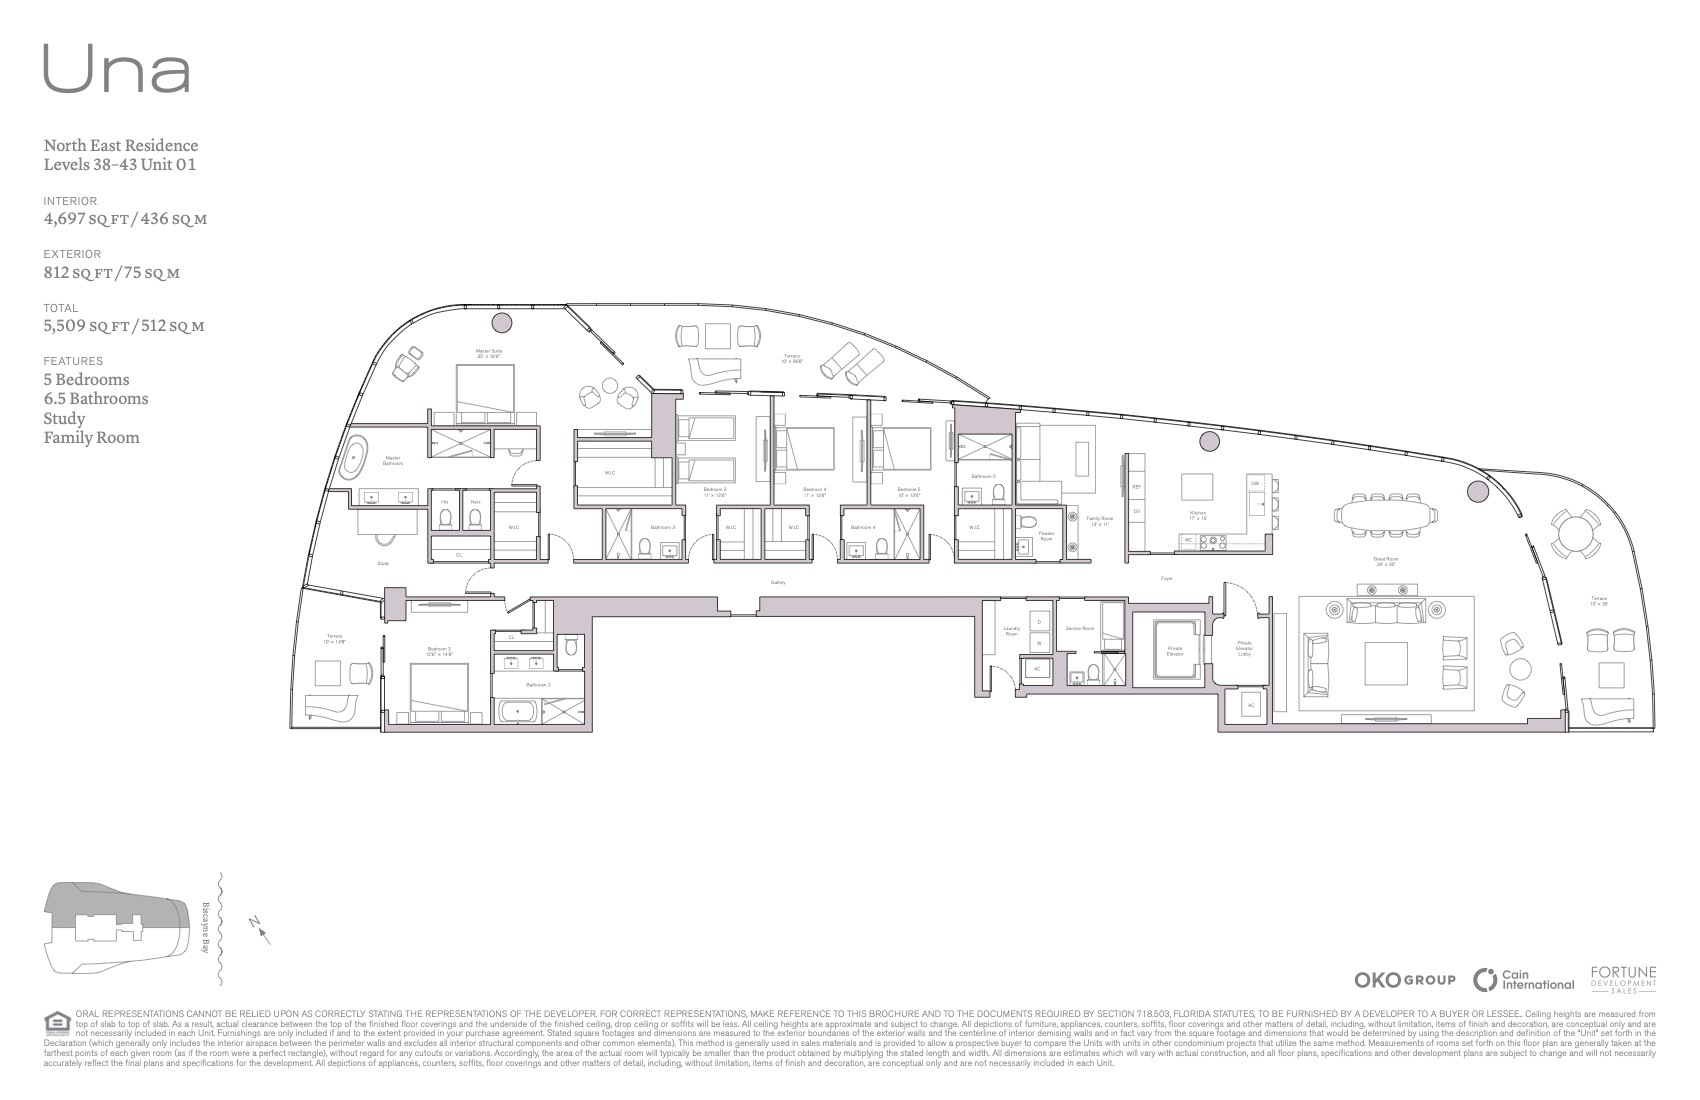 Floor Plan for Una Residences Floor Plans, NE 38-43 Unit 01